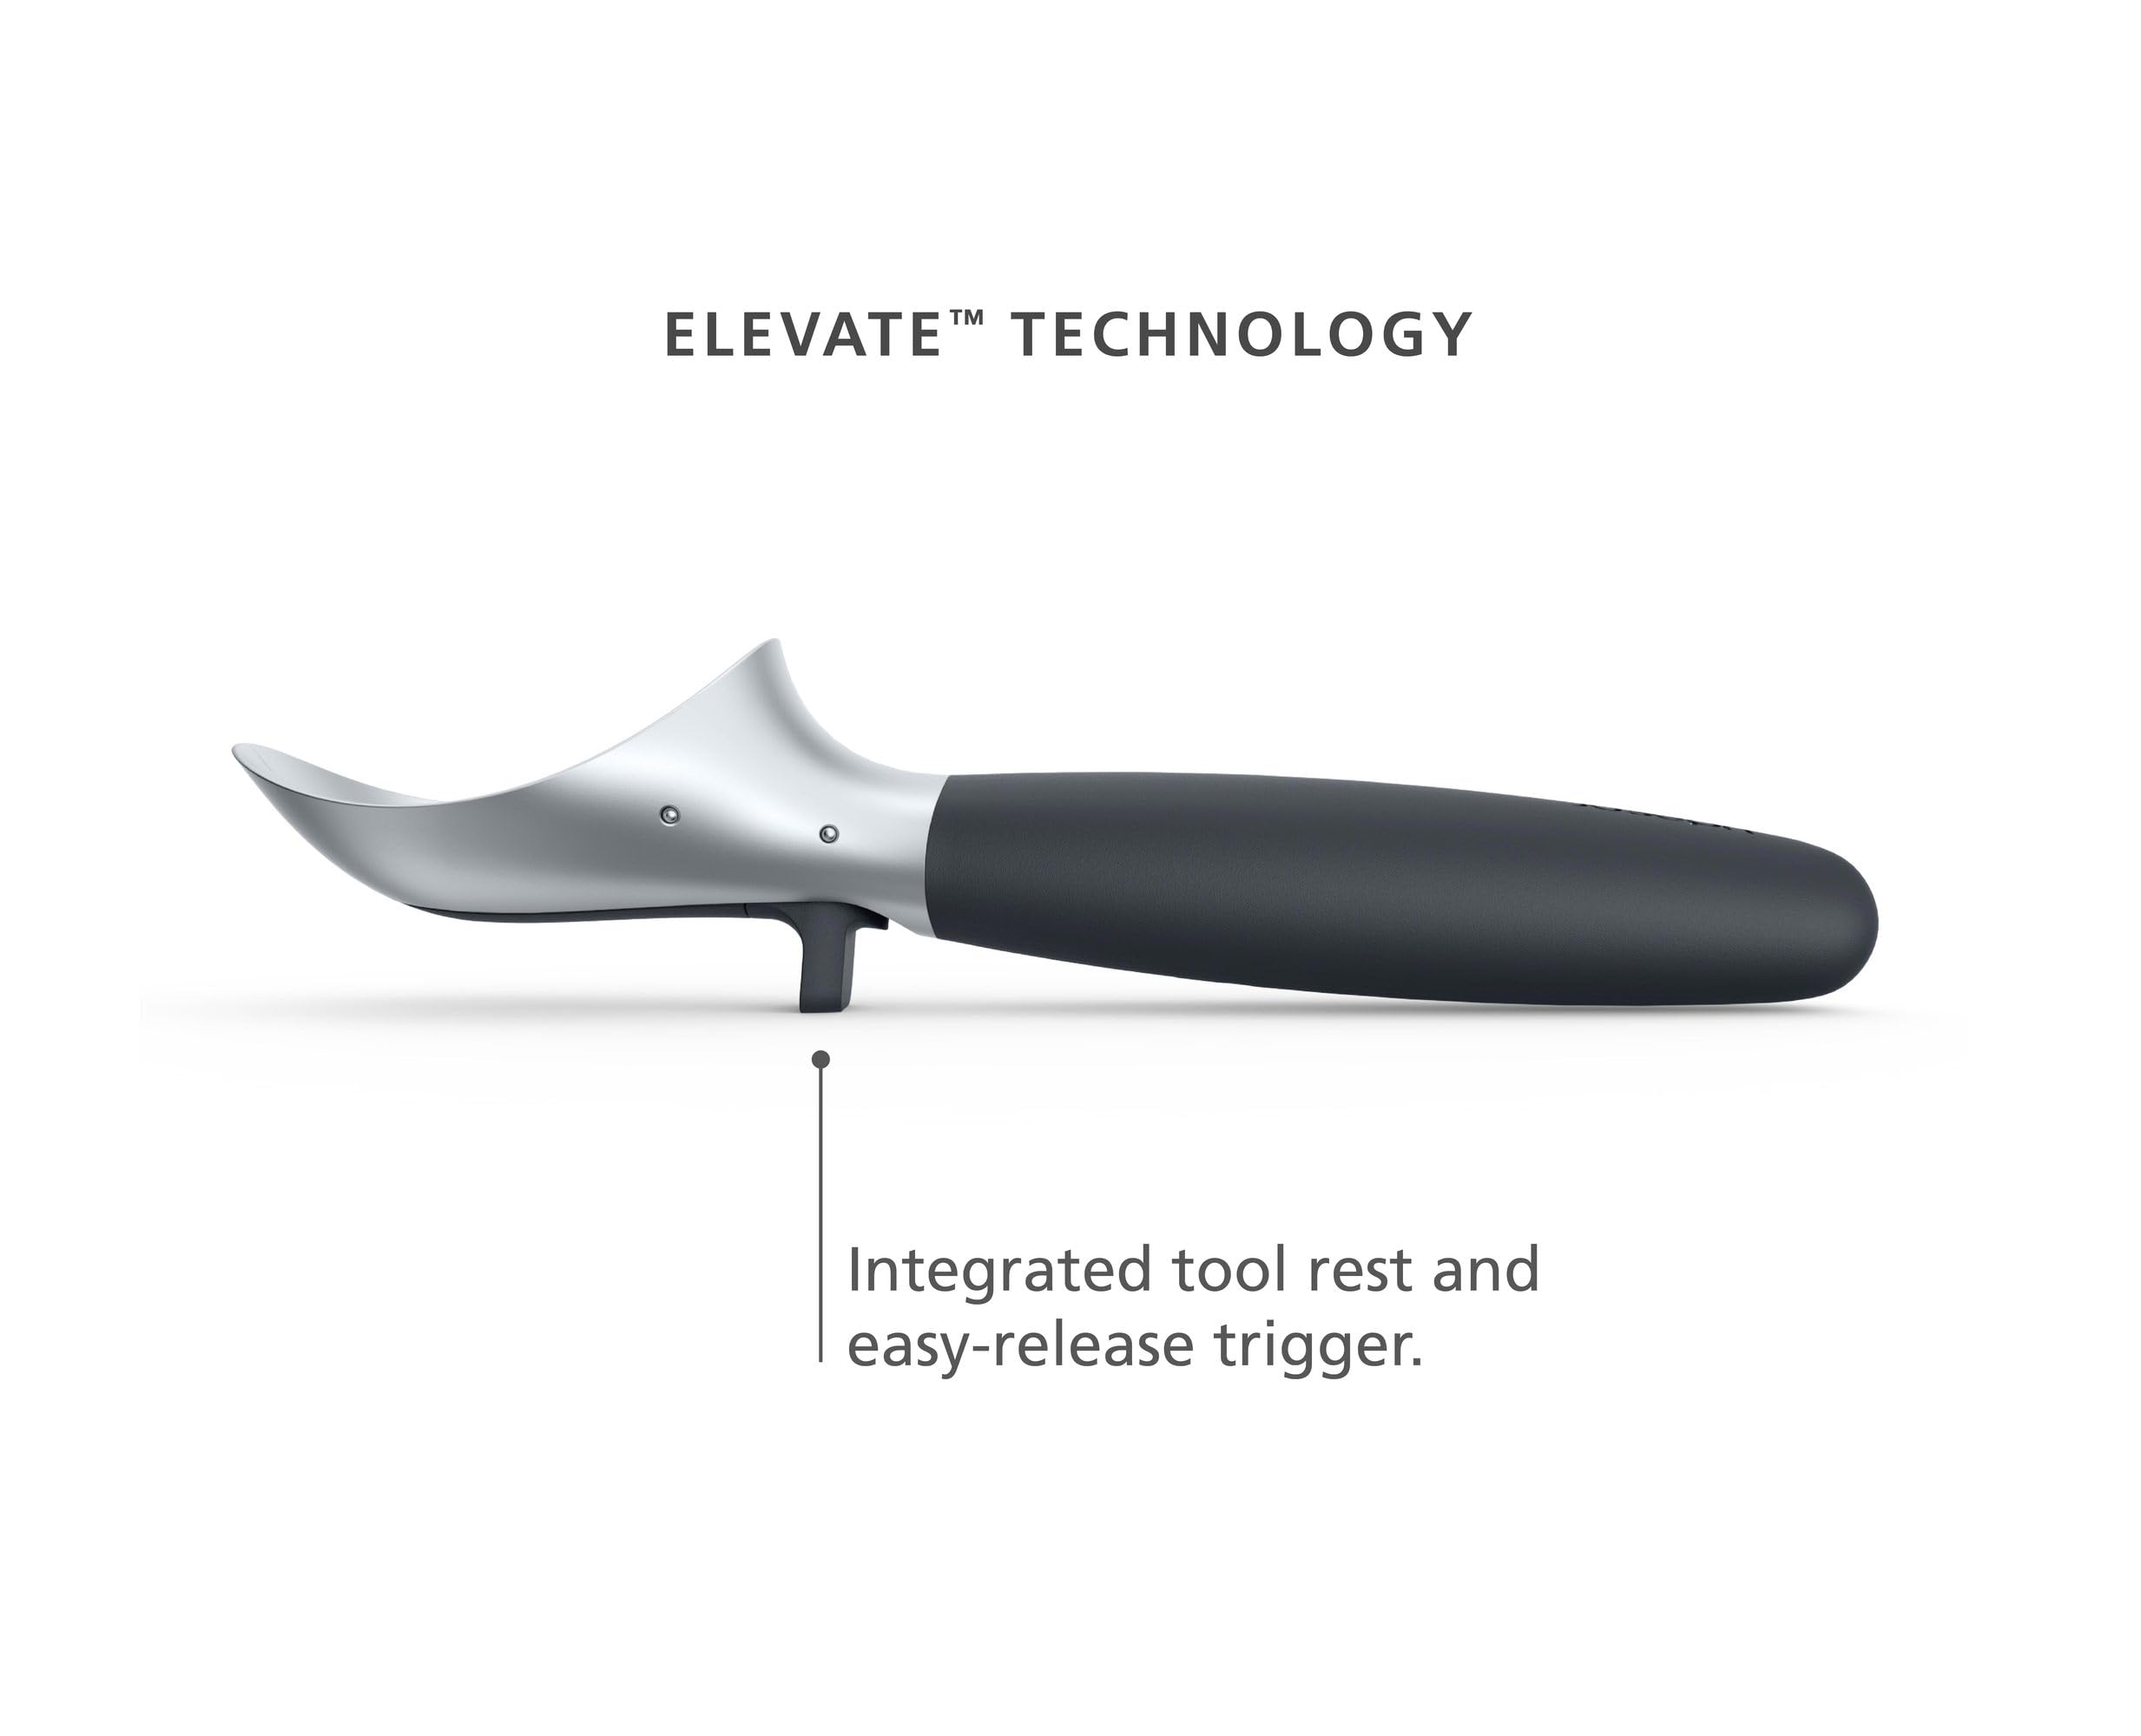 Joseph Joseph Elevate Ice Cream scoop with easy trigger release and intergrated tool rest improves hygiene, Non slip handle